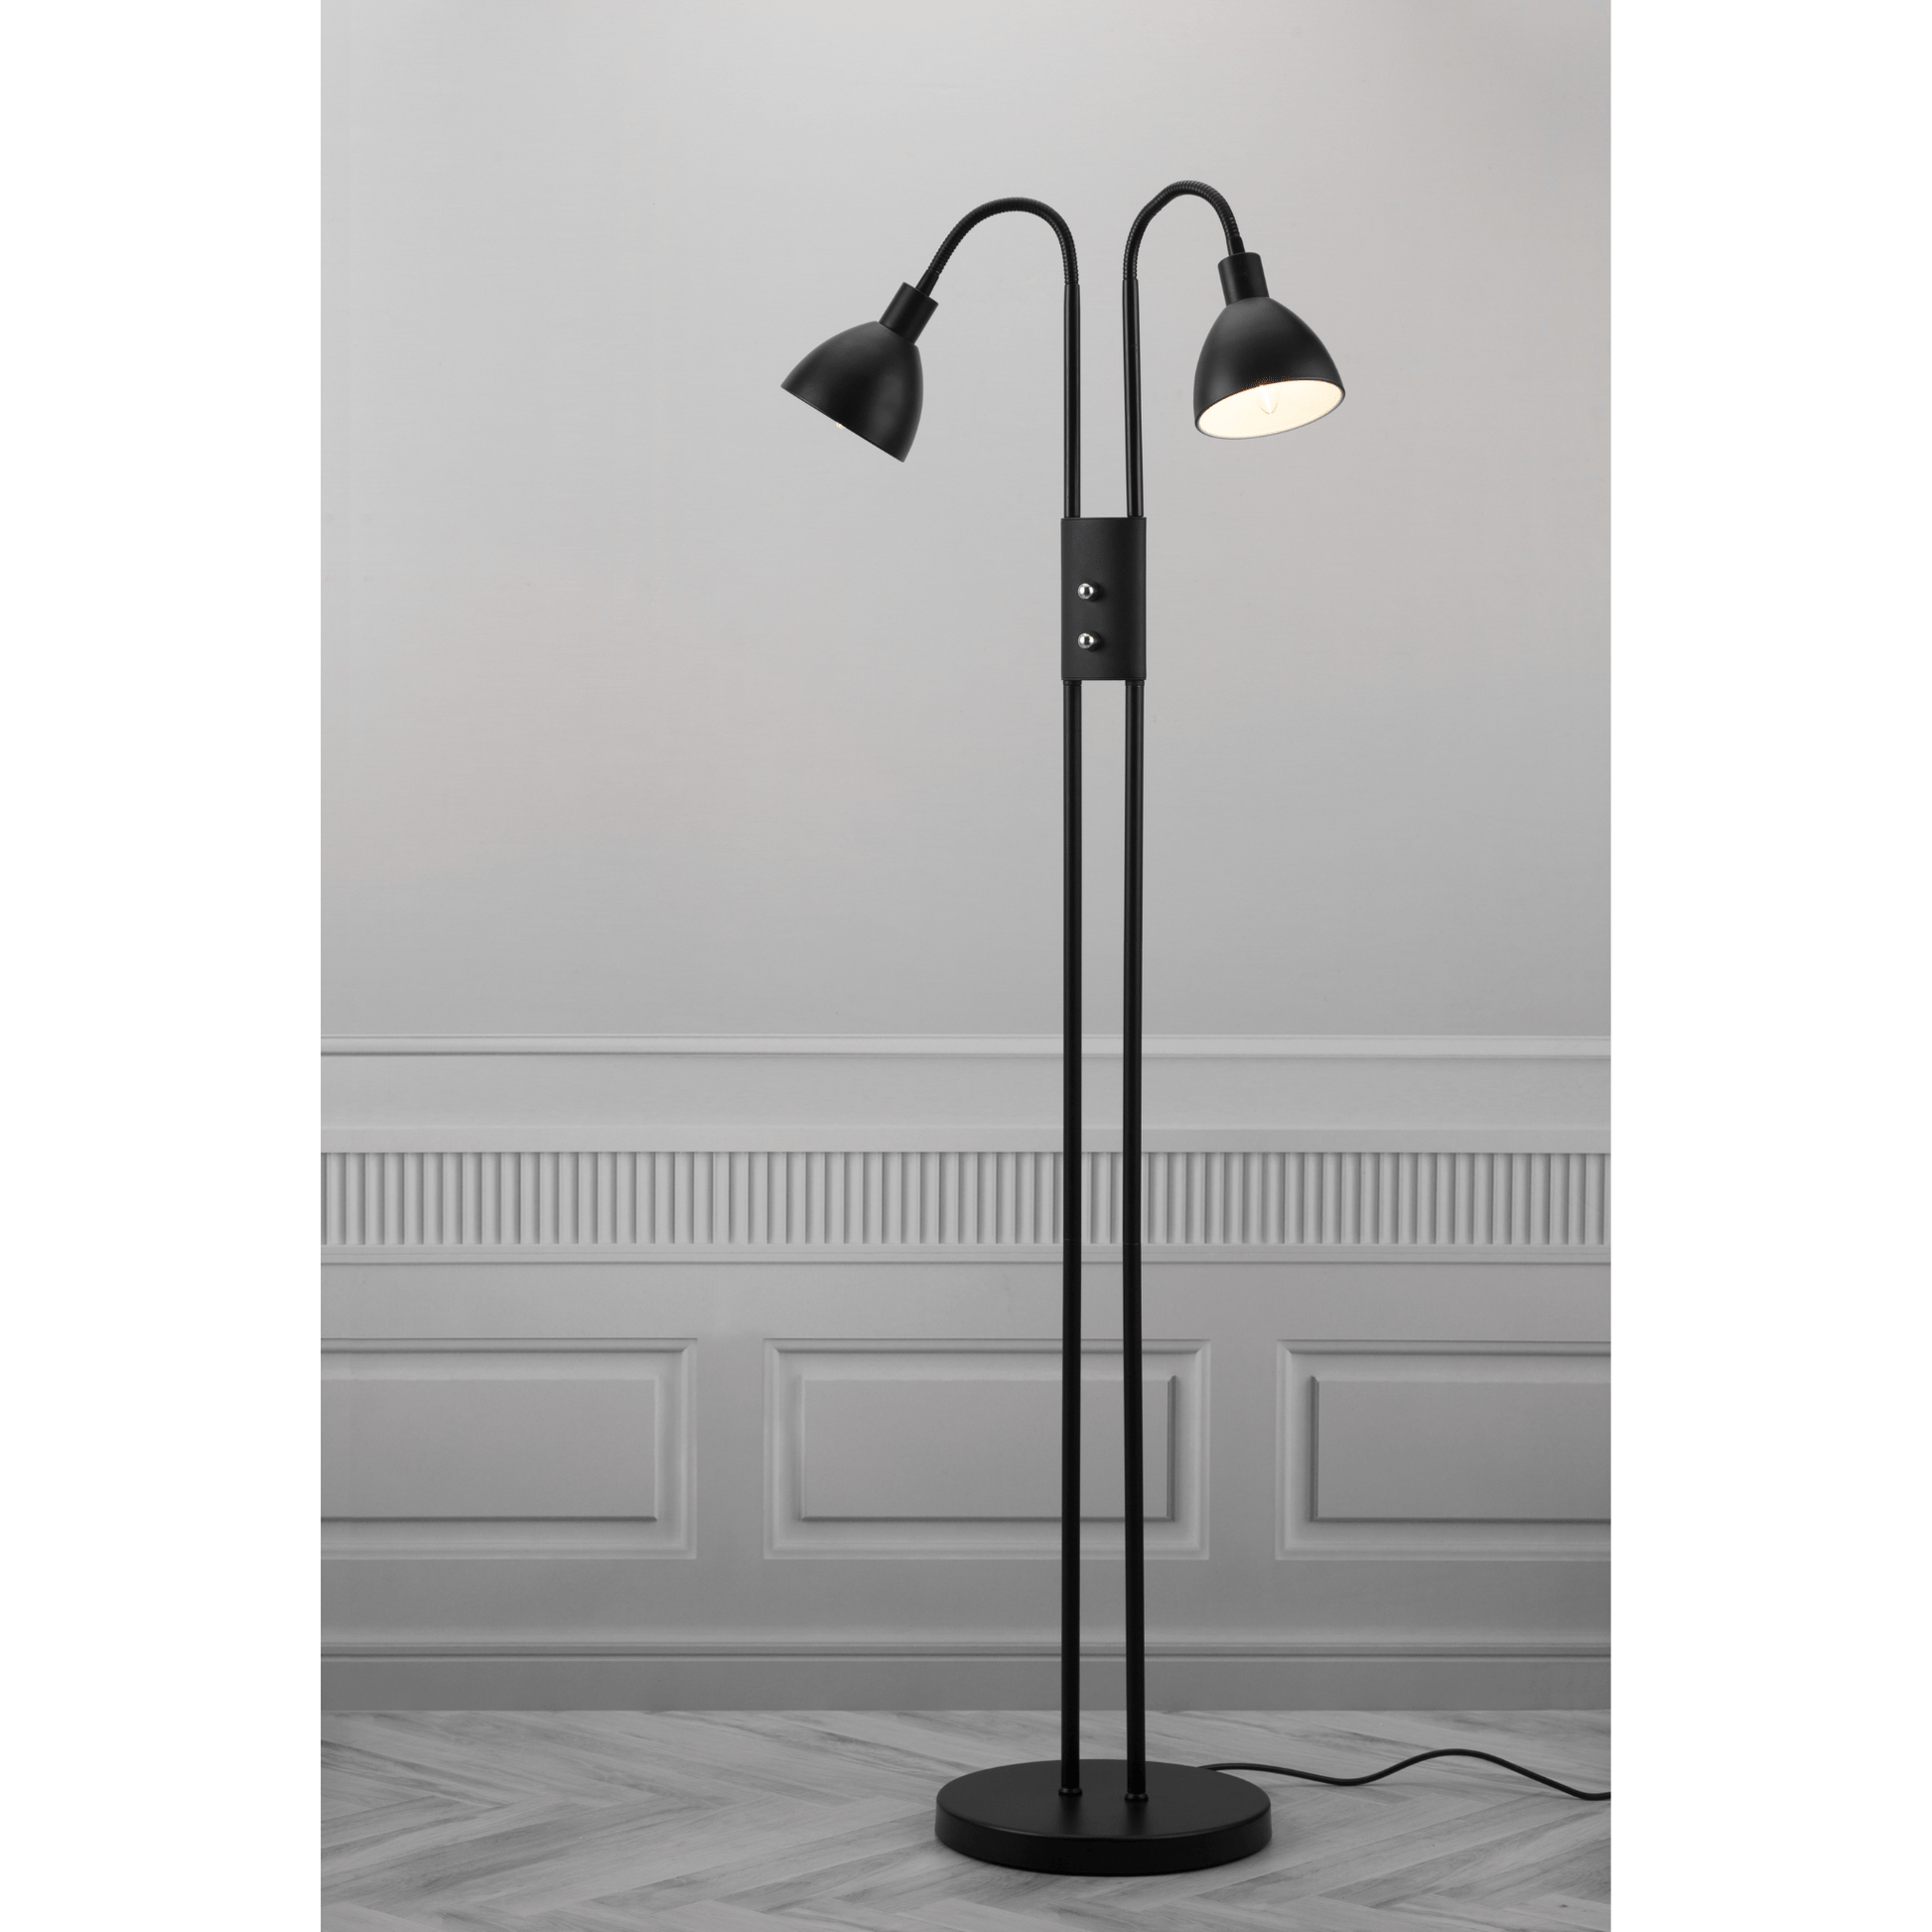 Nordlux Floor Lamp Ray Double Floor Lamp, chrome or black